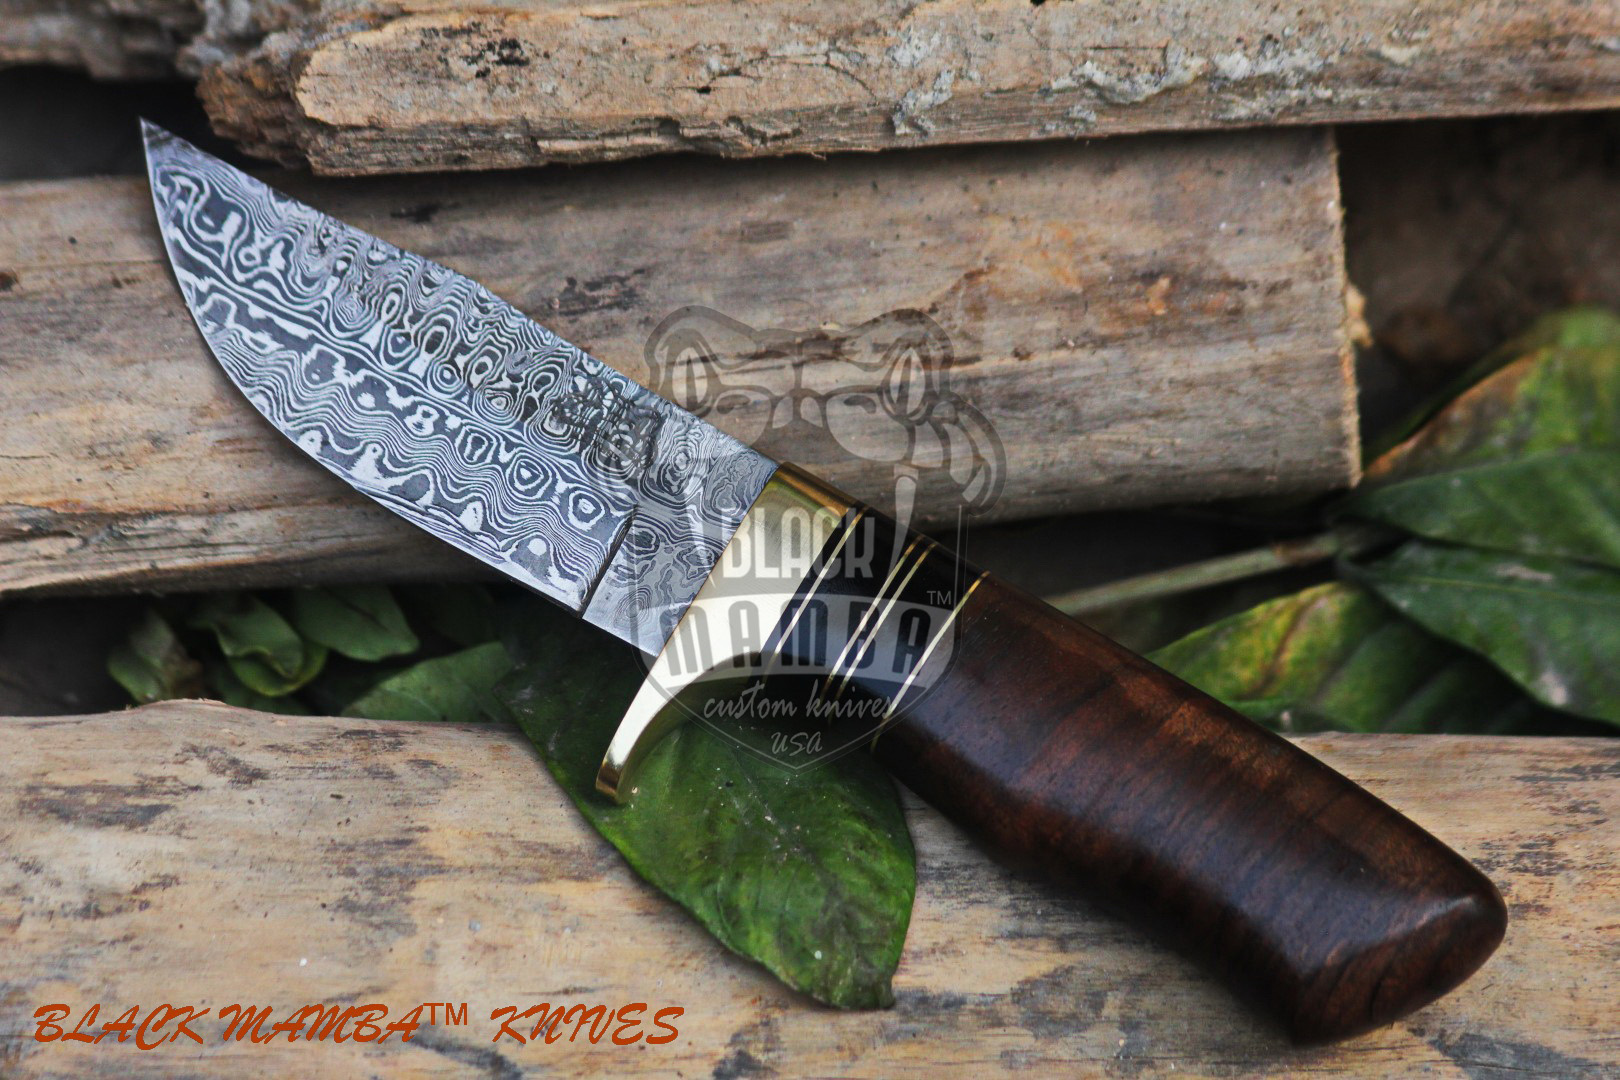 Bmk-177 Timber Rattlesnake Damascus Knife Hand Made Word USA